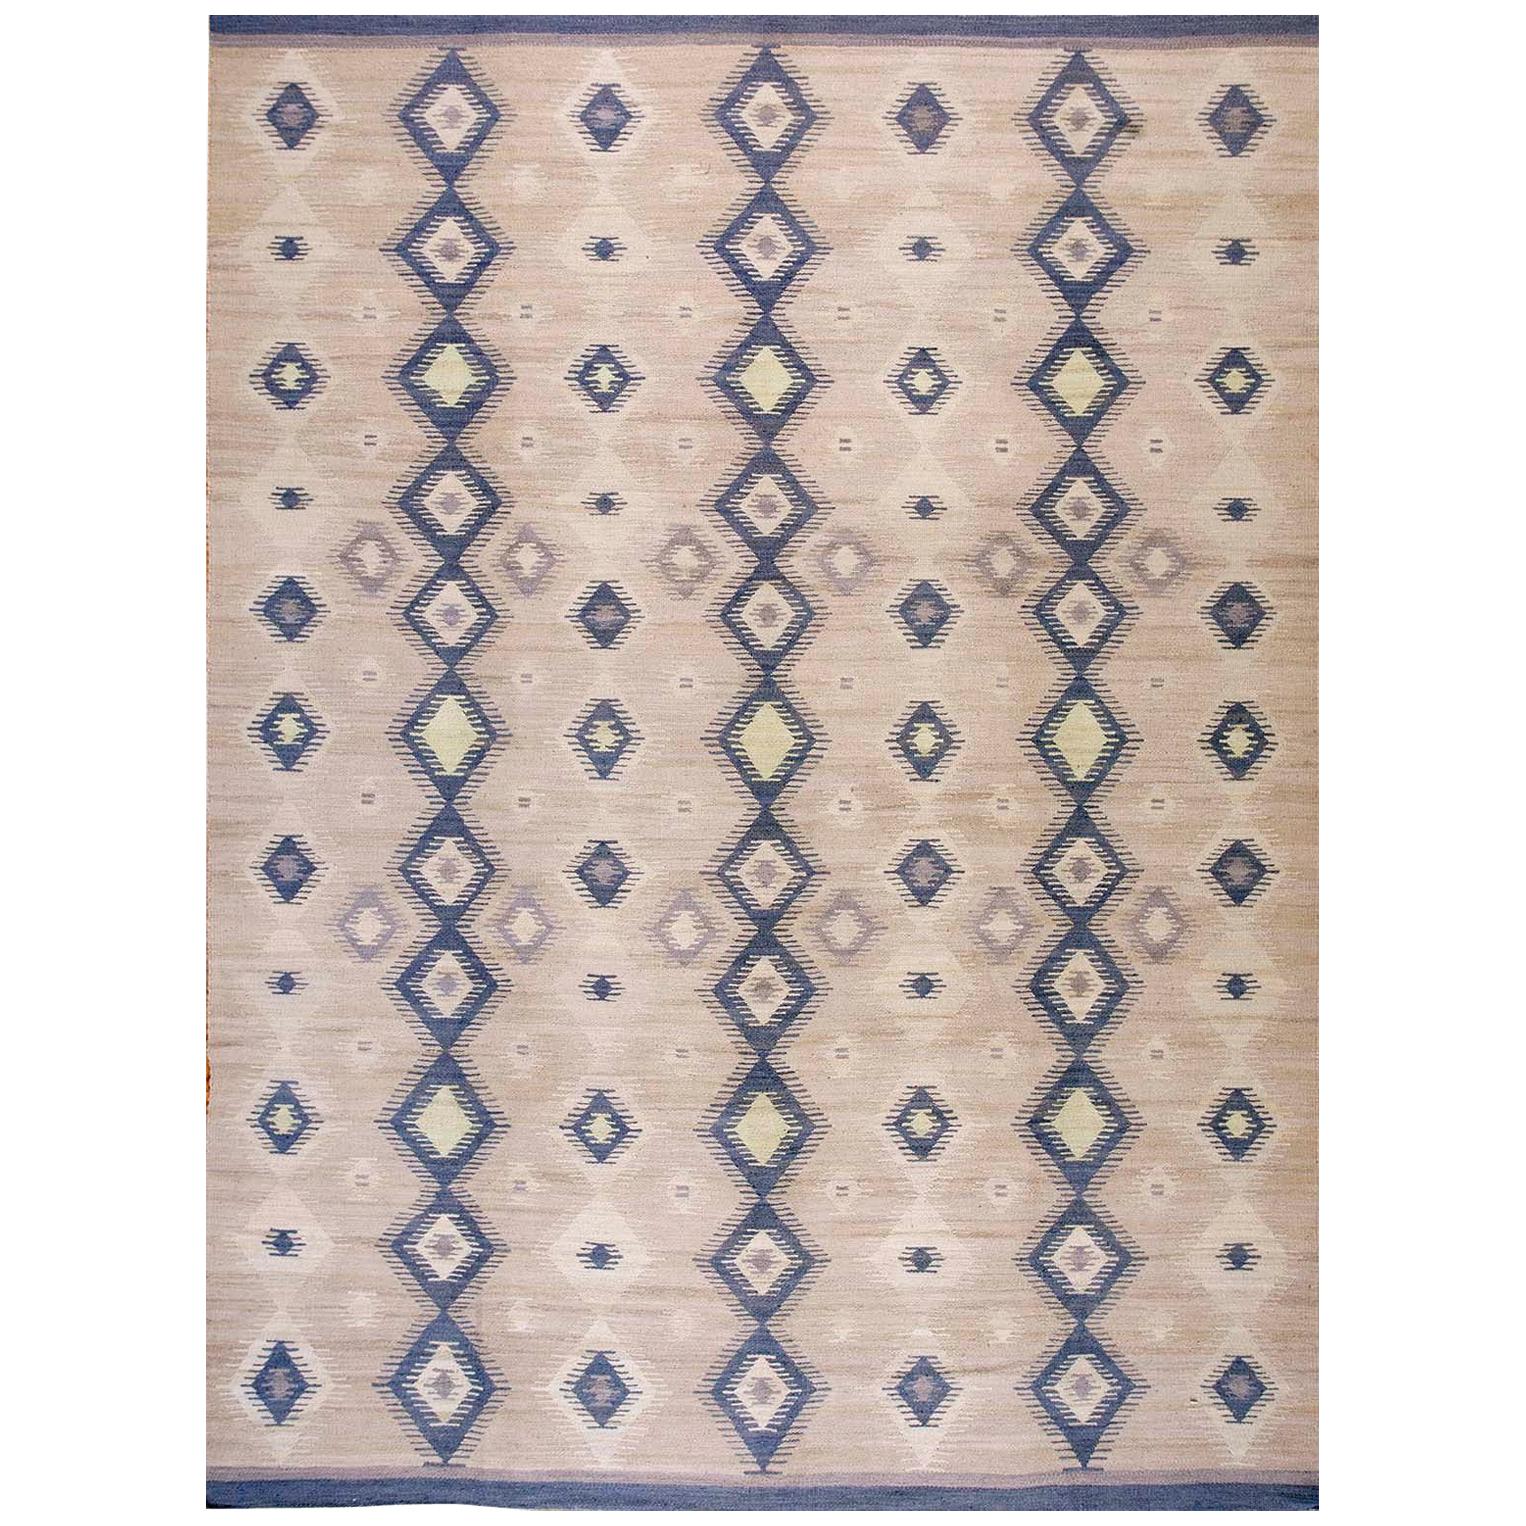 Contemporary Handwoven Navajo Style Flat Weave Carpet (9' x 12' - 275 x 365 cm)